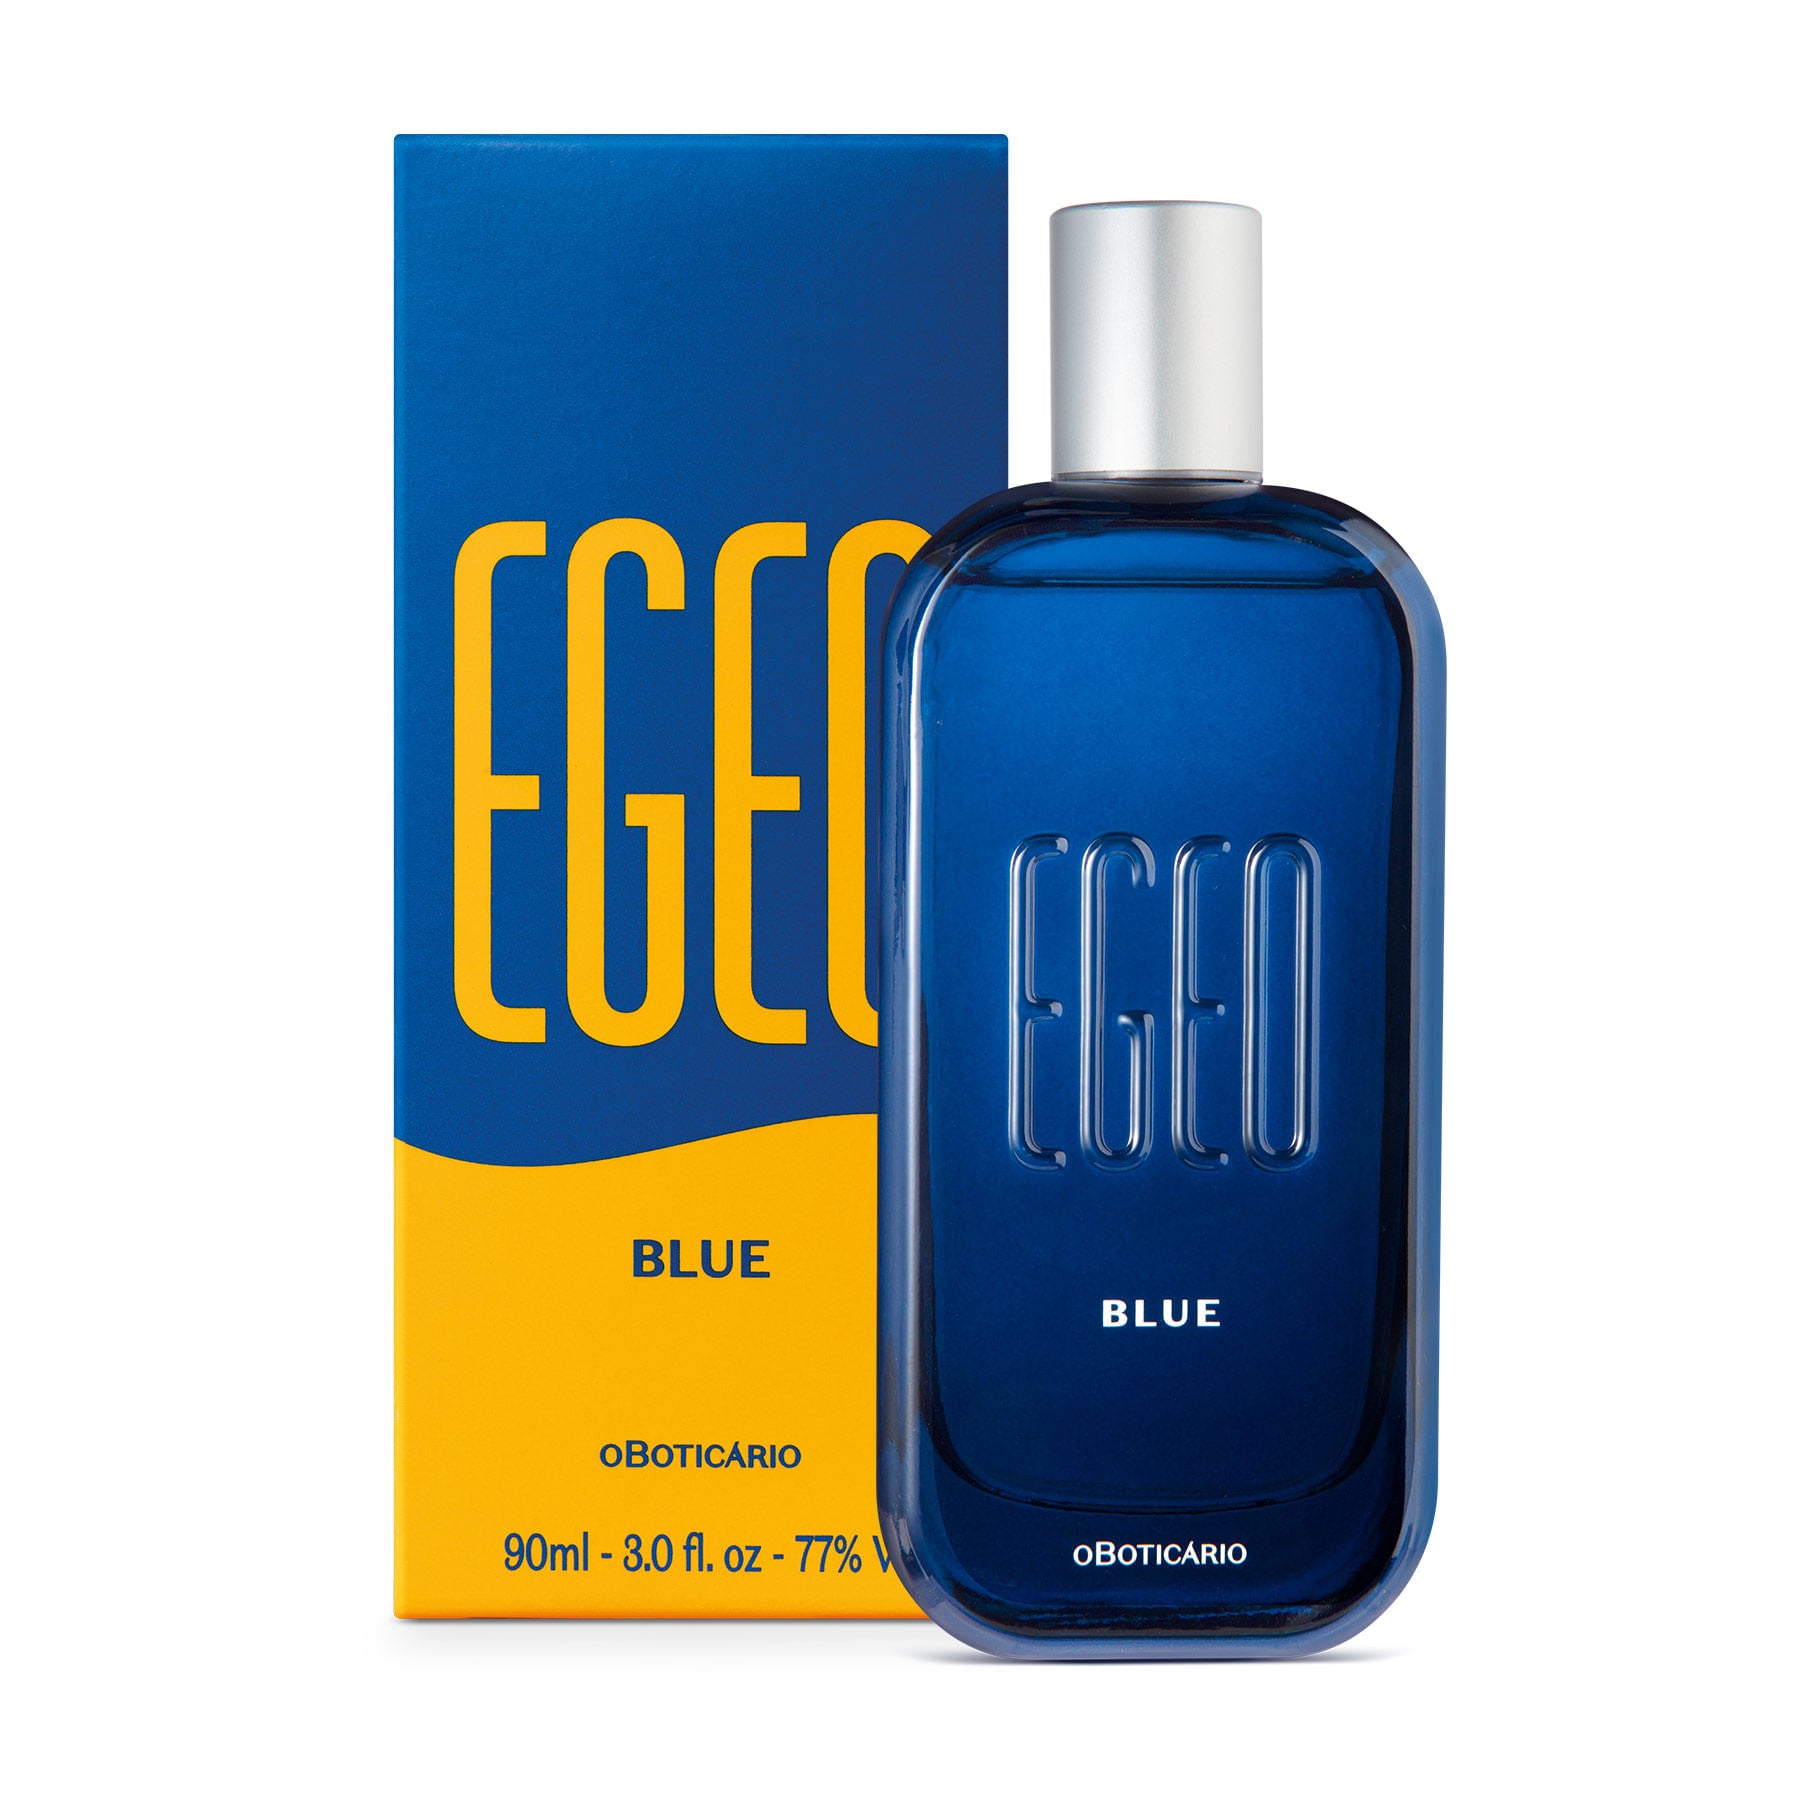 Perfume Egeo Edt Blue 90Ml en Oboticário Colombia